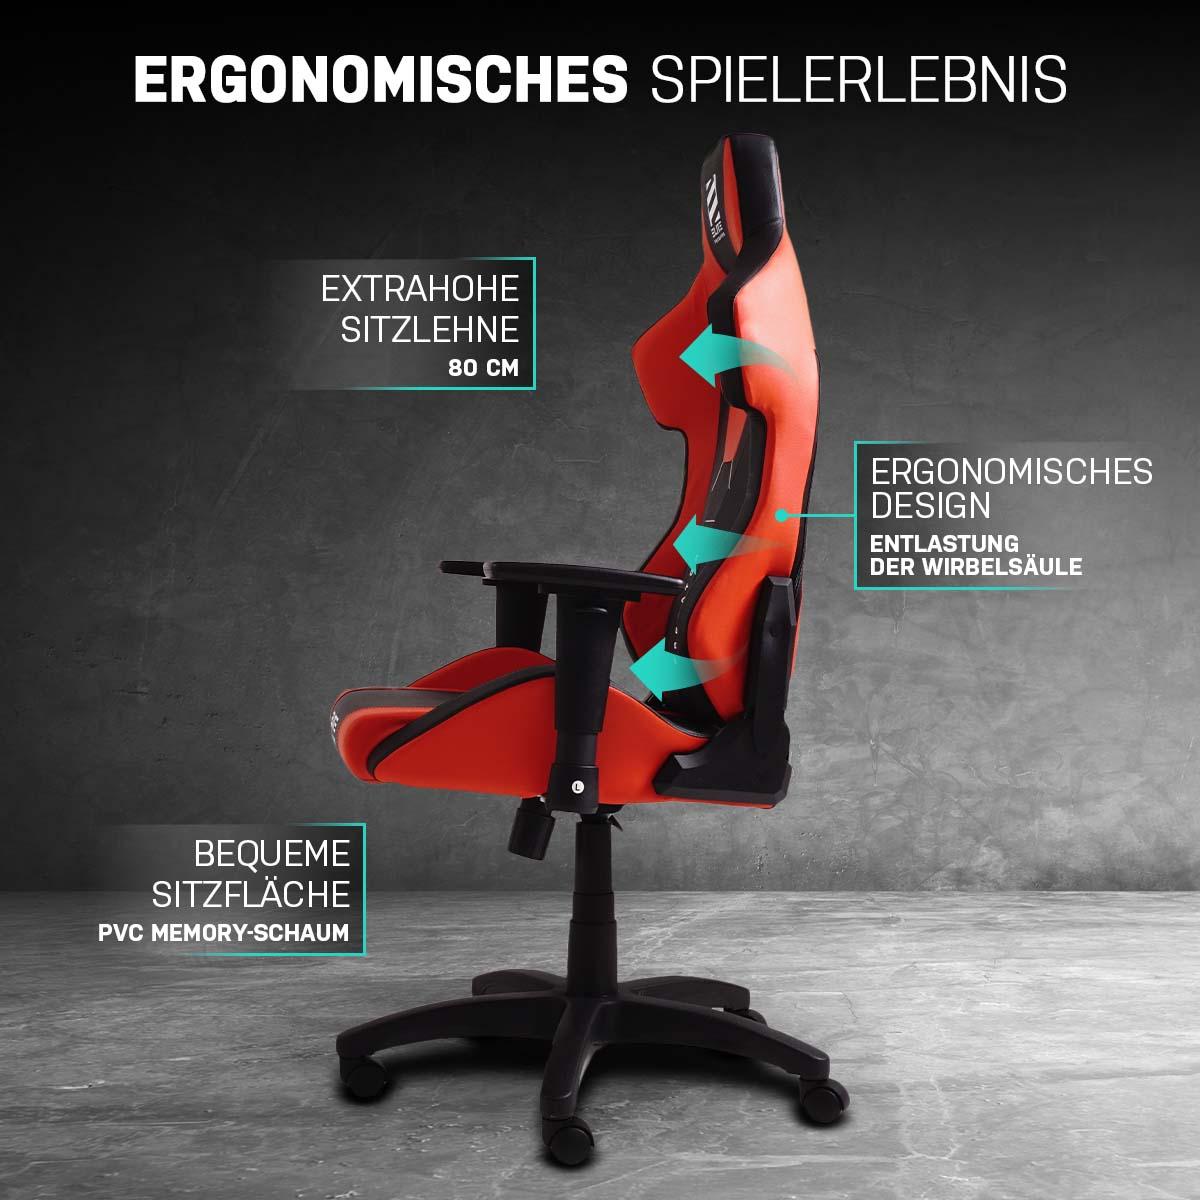 ELITE PREDATOR Gaming Stuhl, Rot/Schwarz